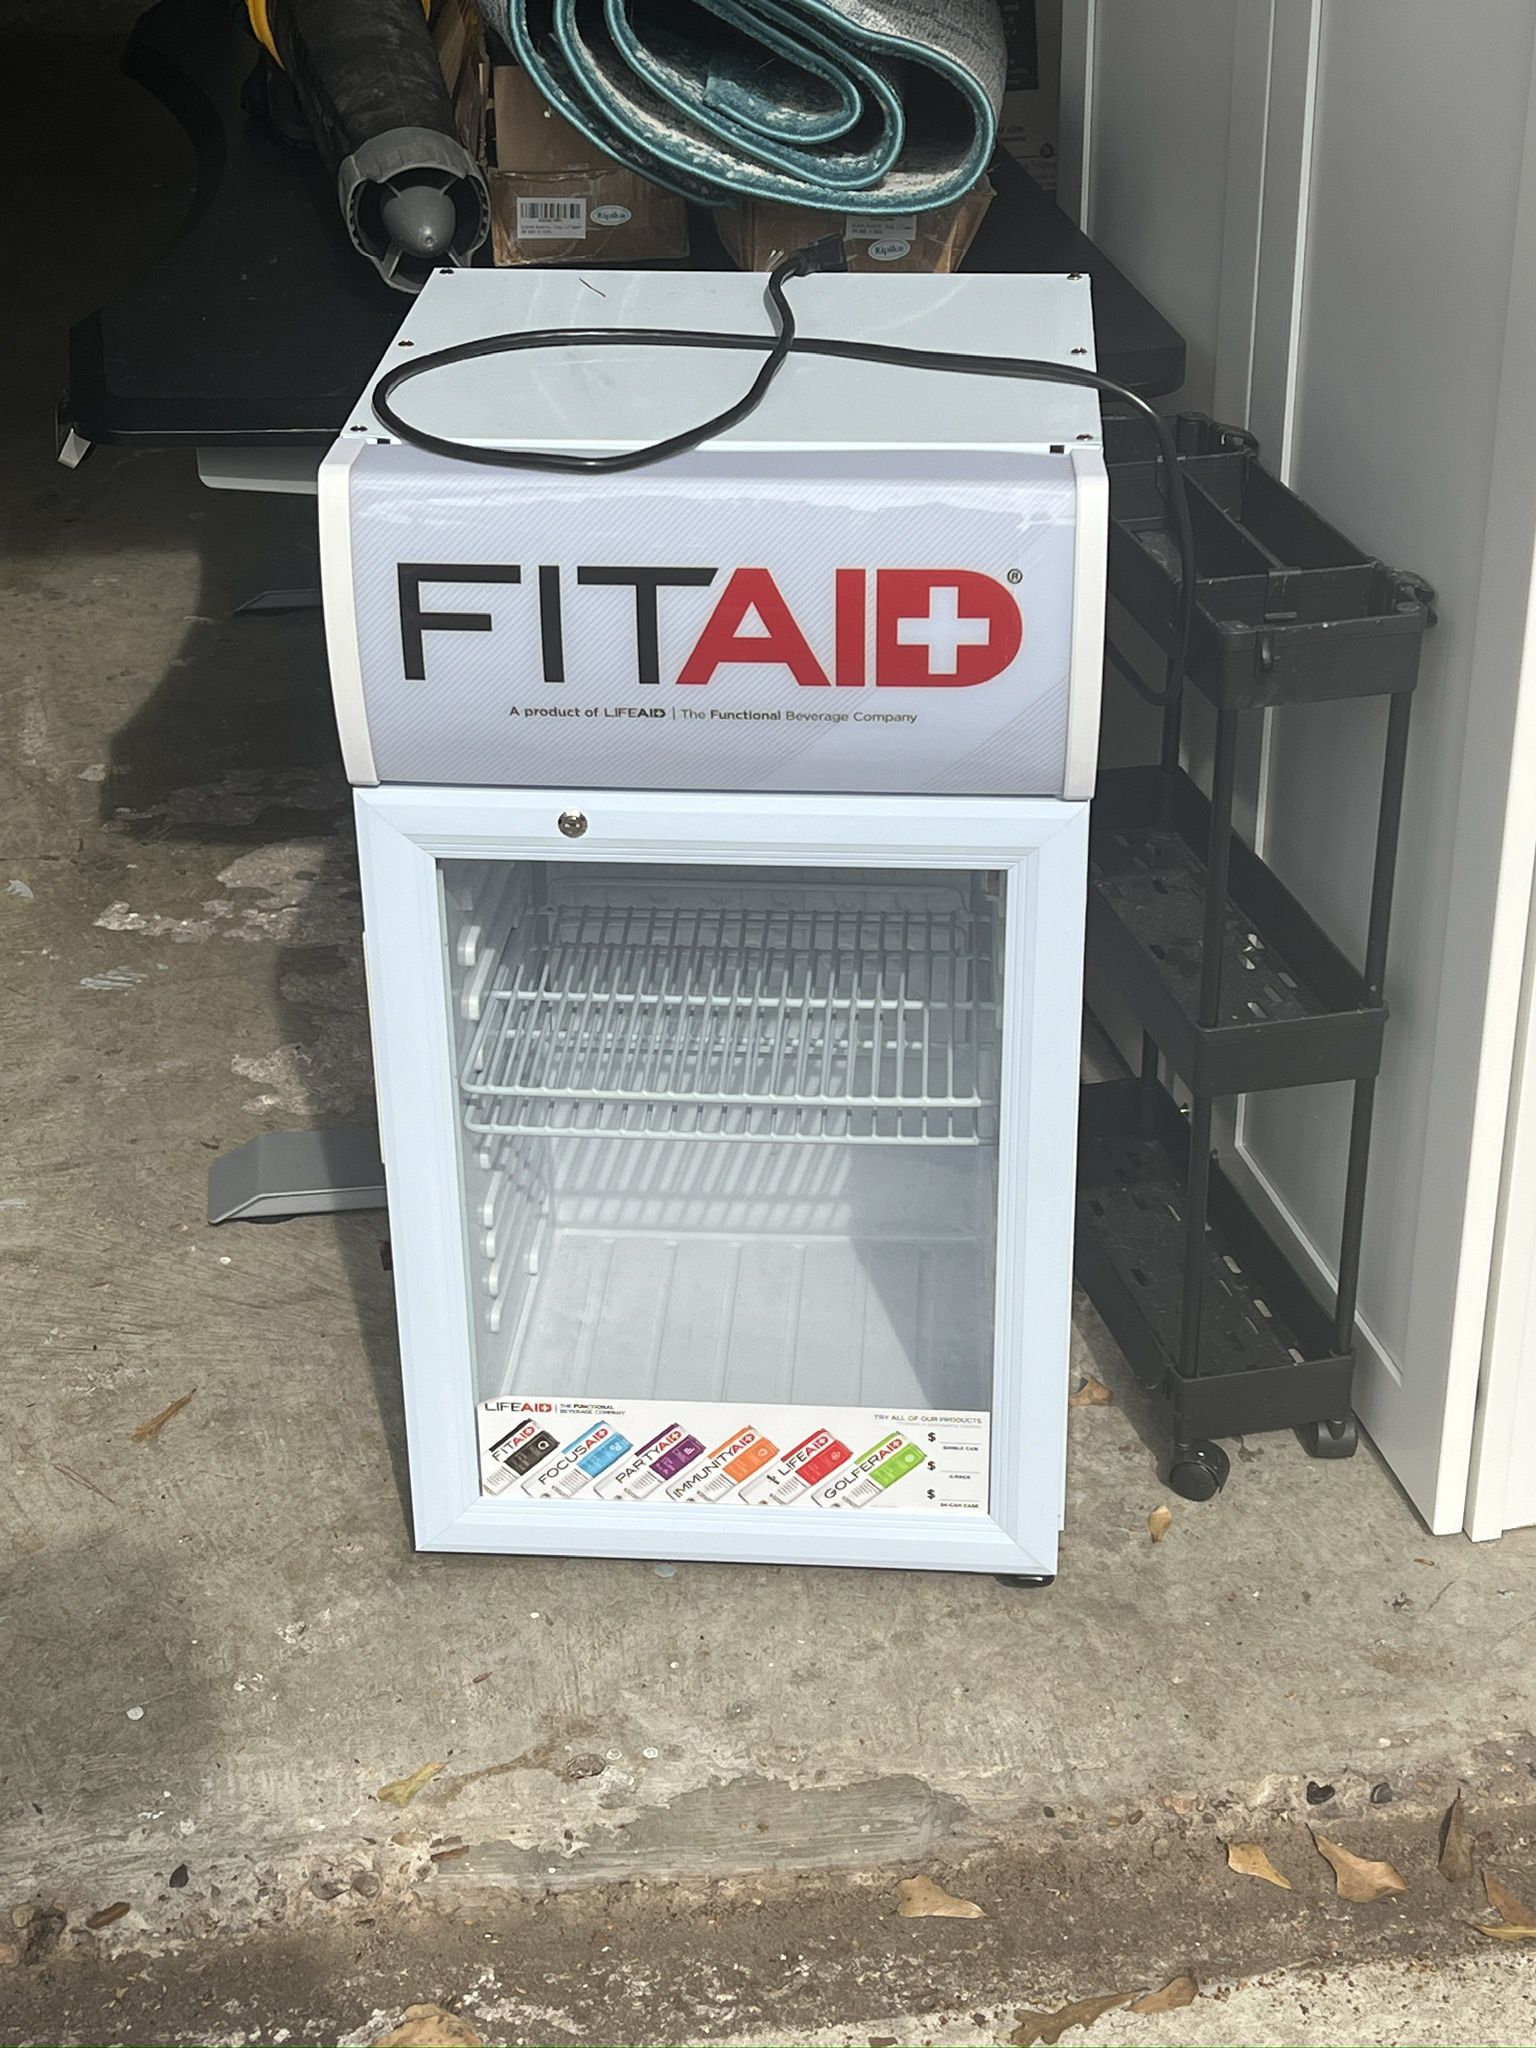 FITAID mini Fridge